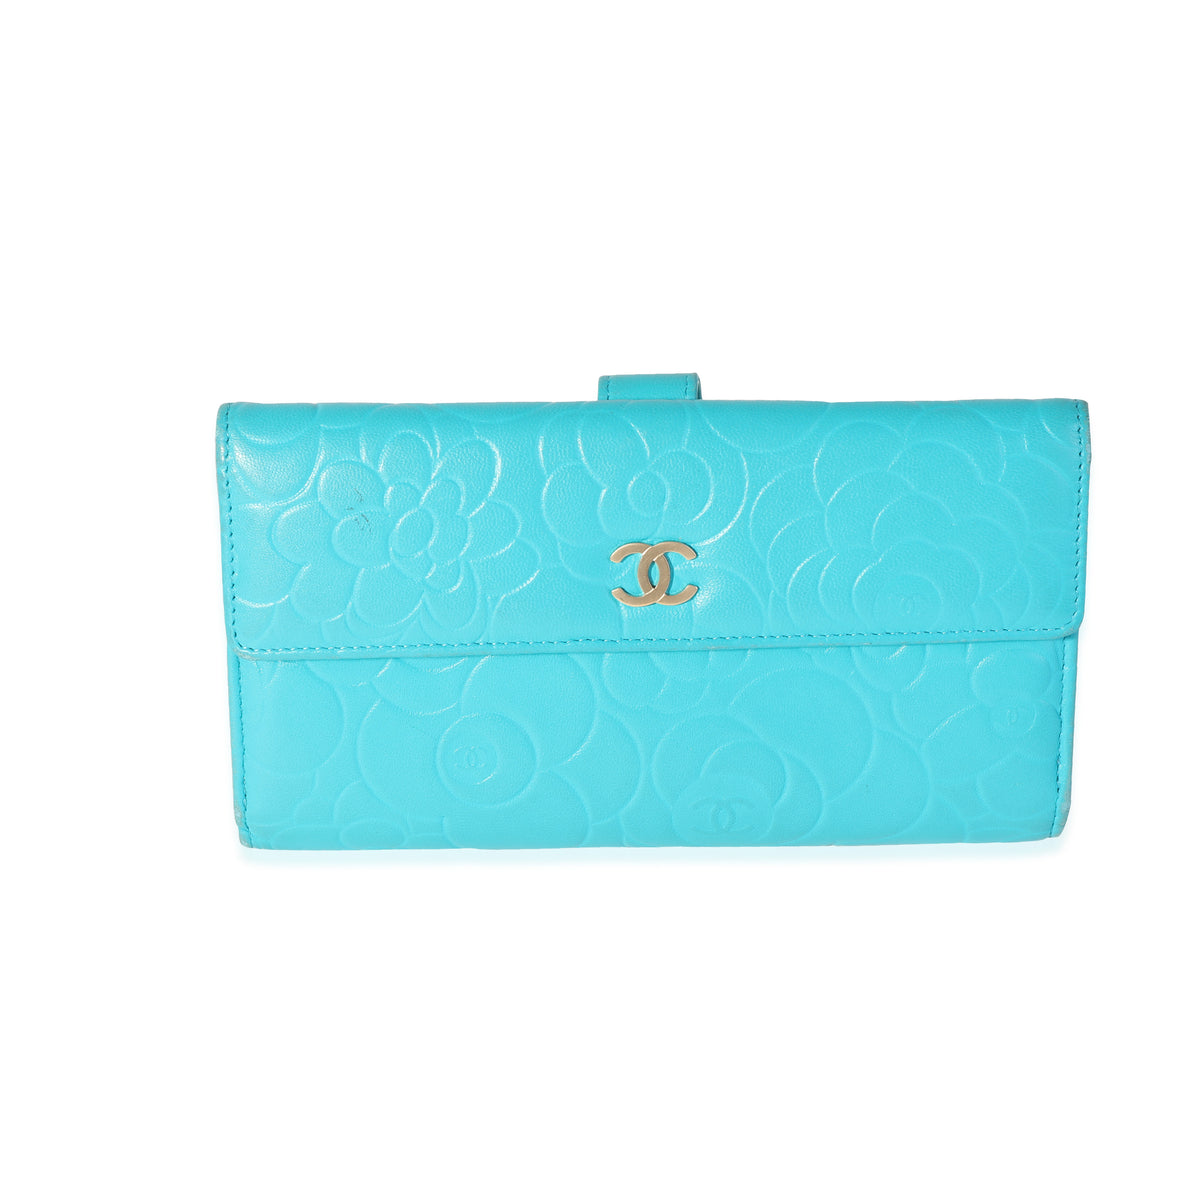 Chanel Teal Camellia-Embossed Lambskin Wallet